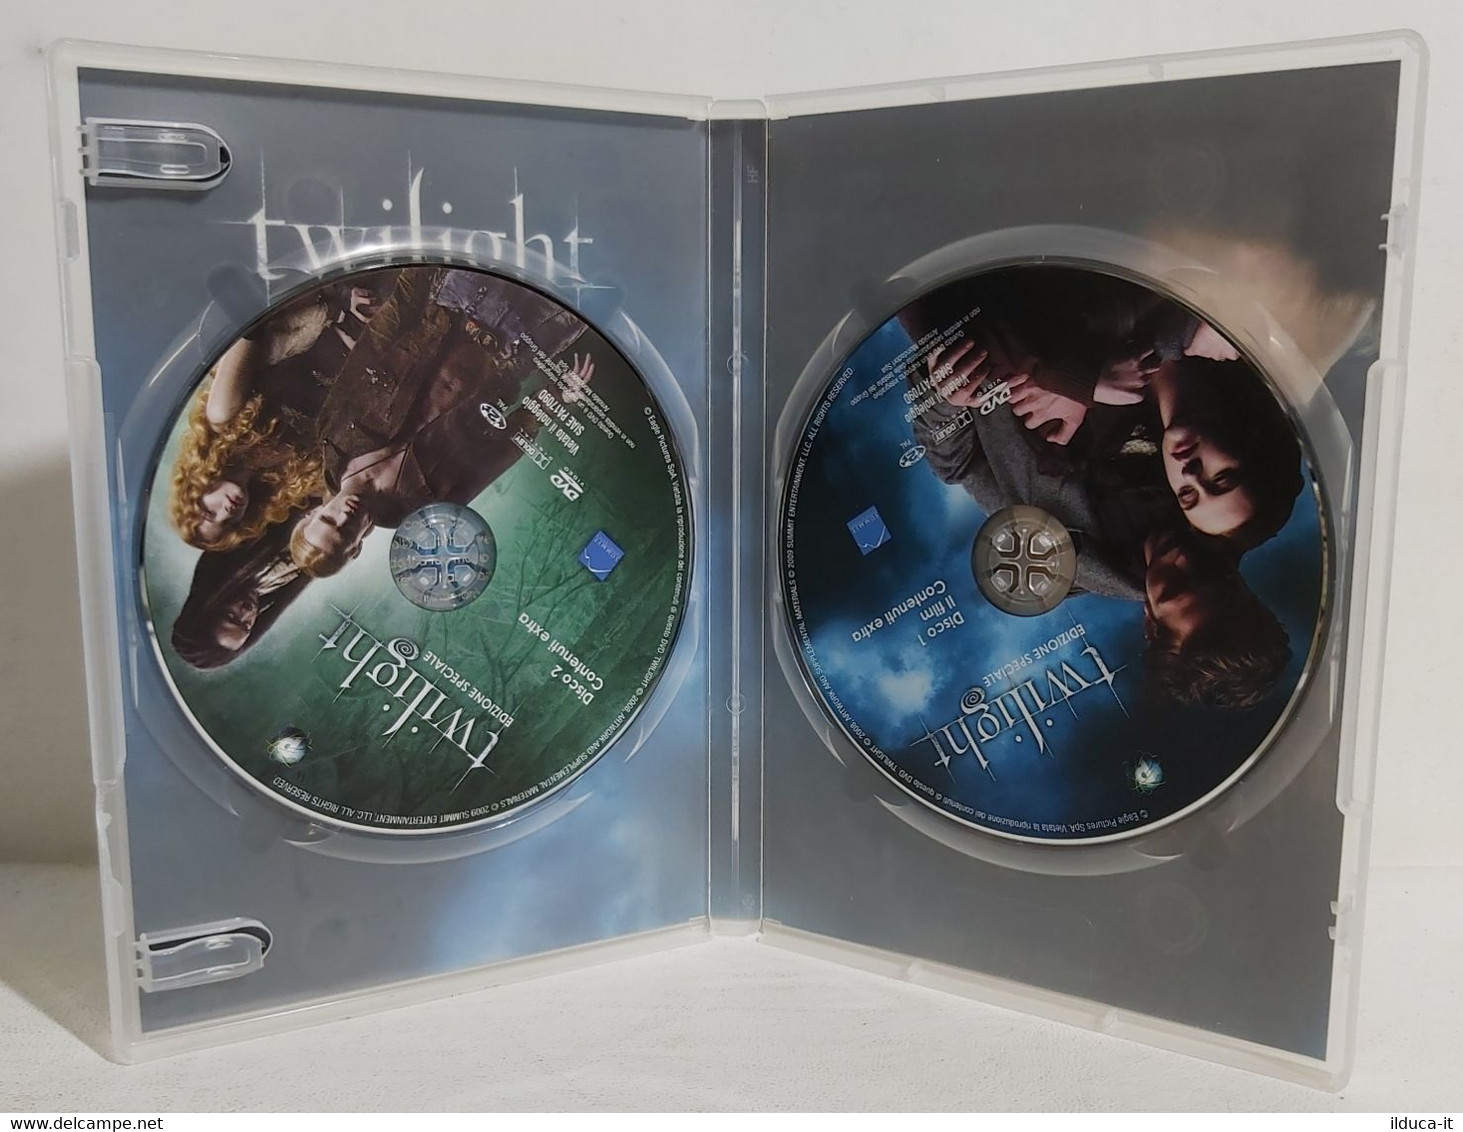 I103837 DVD Edizione Speciale 2 Dischi - TWILIGHT (2008) - Kristen Stewart - Sci-Fi, Fantasy